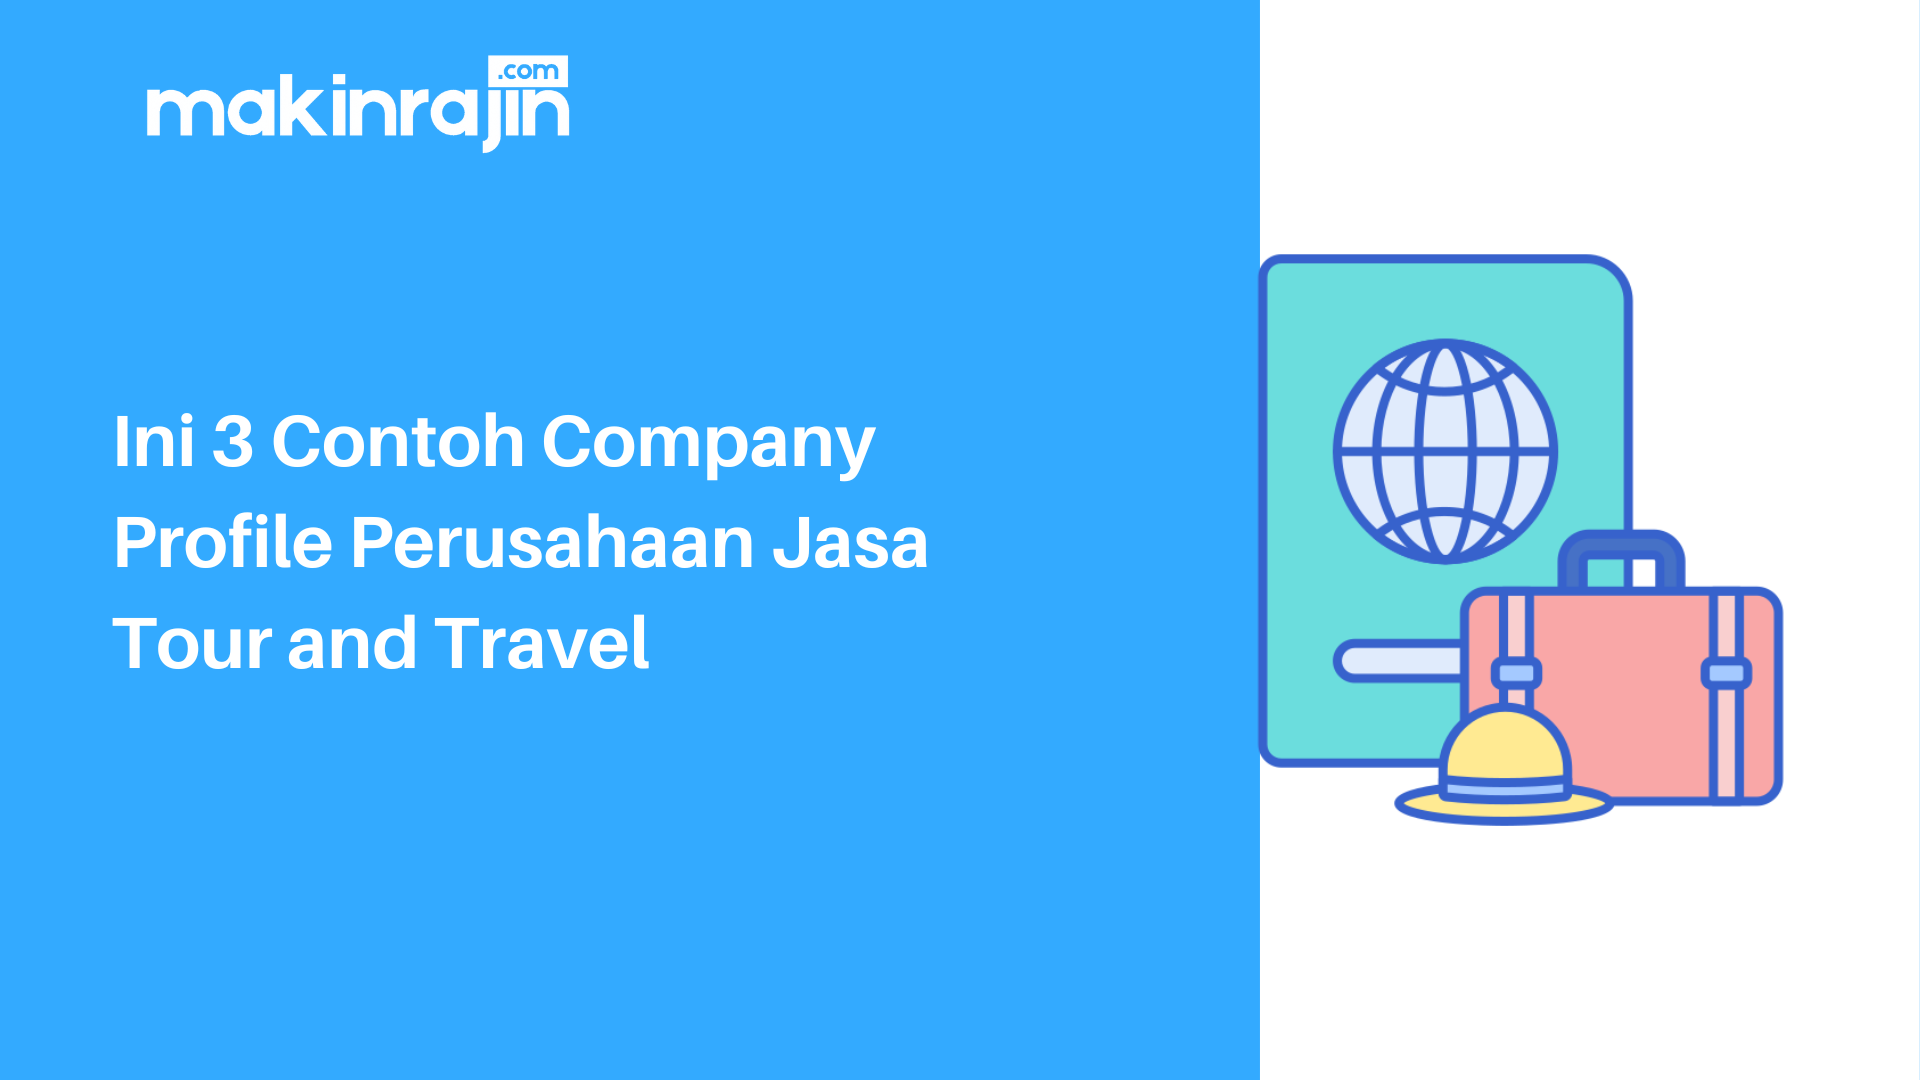 Ini 3 Contoh Company Profile Perusahaan Jasa Tour and Travel